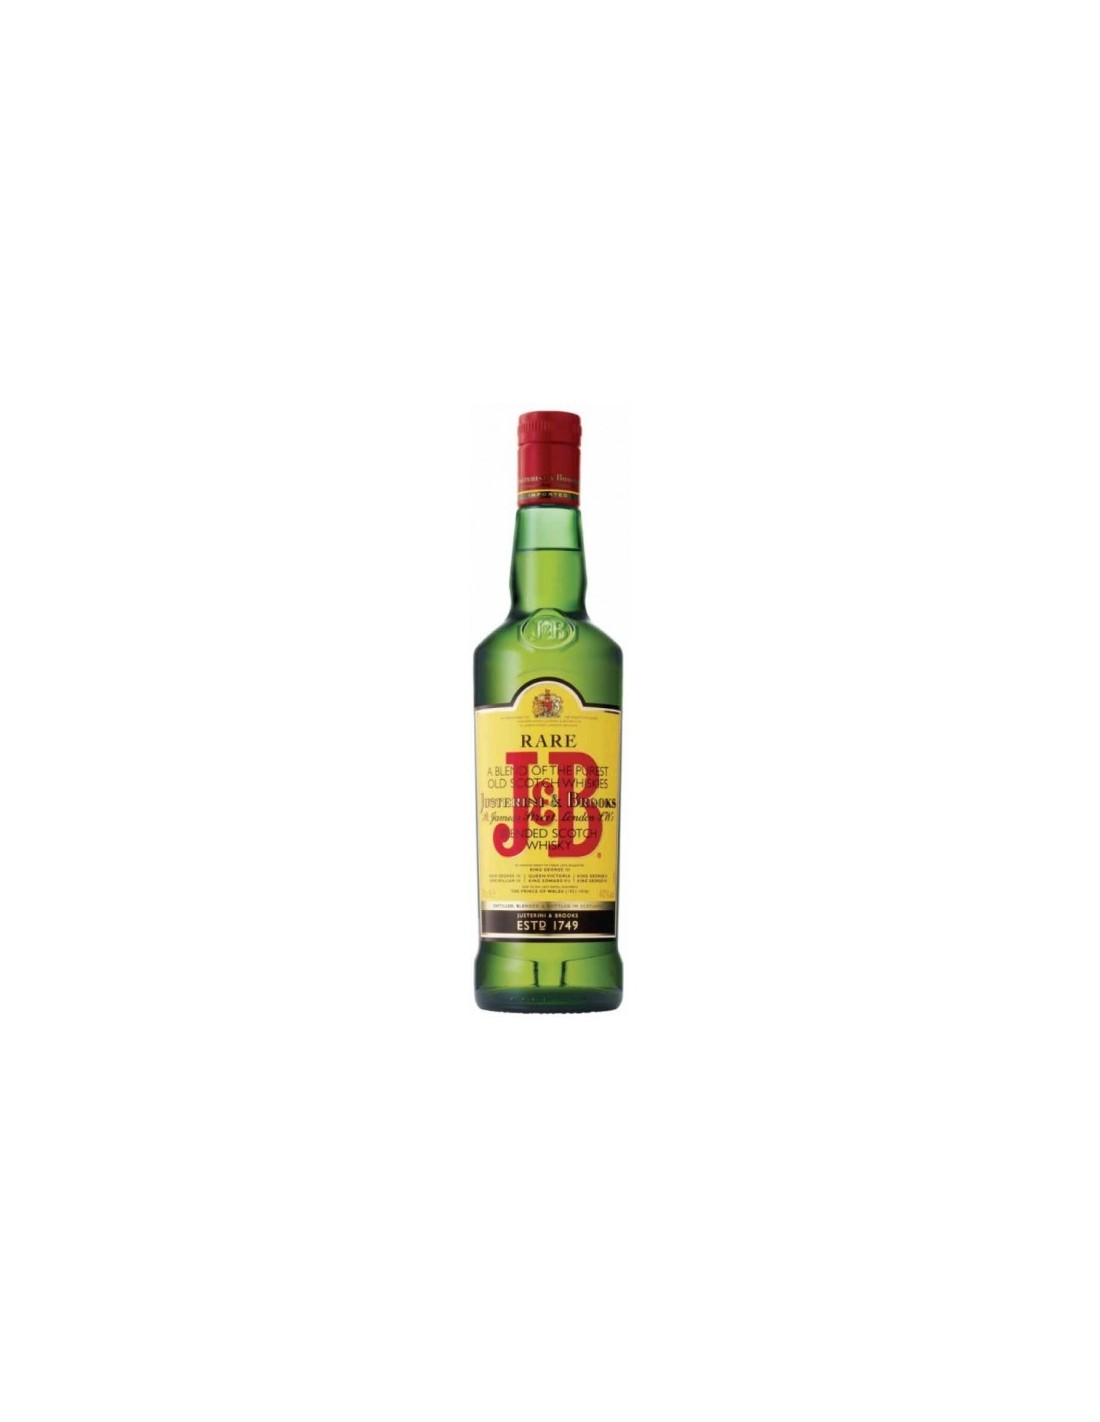 Whisky J&B Rare, 0.7L, 40% alc., Scotia alcooldiscount.ro